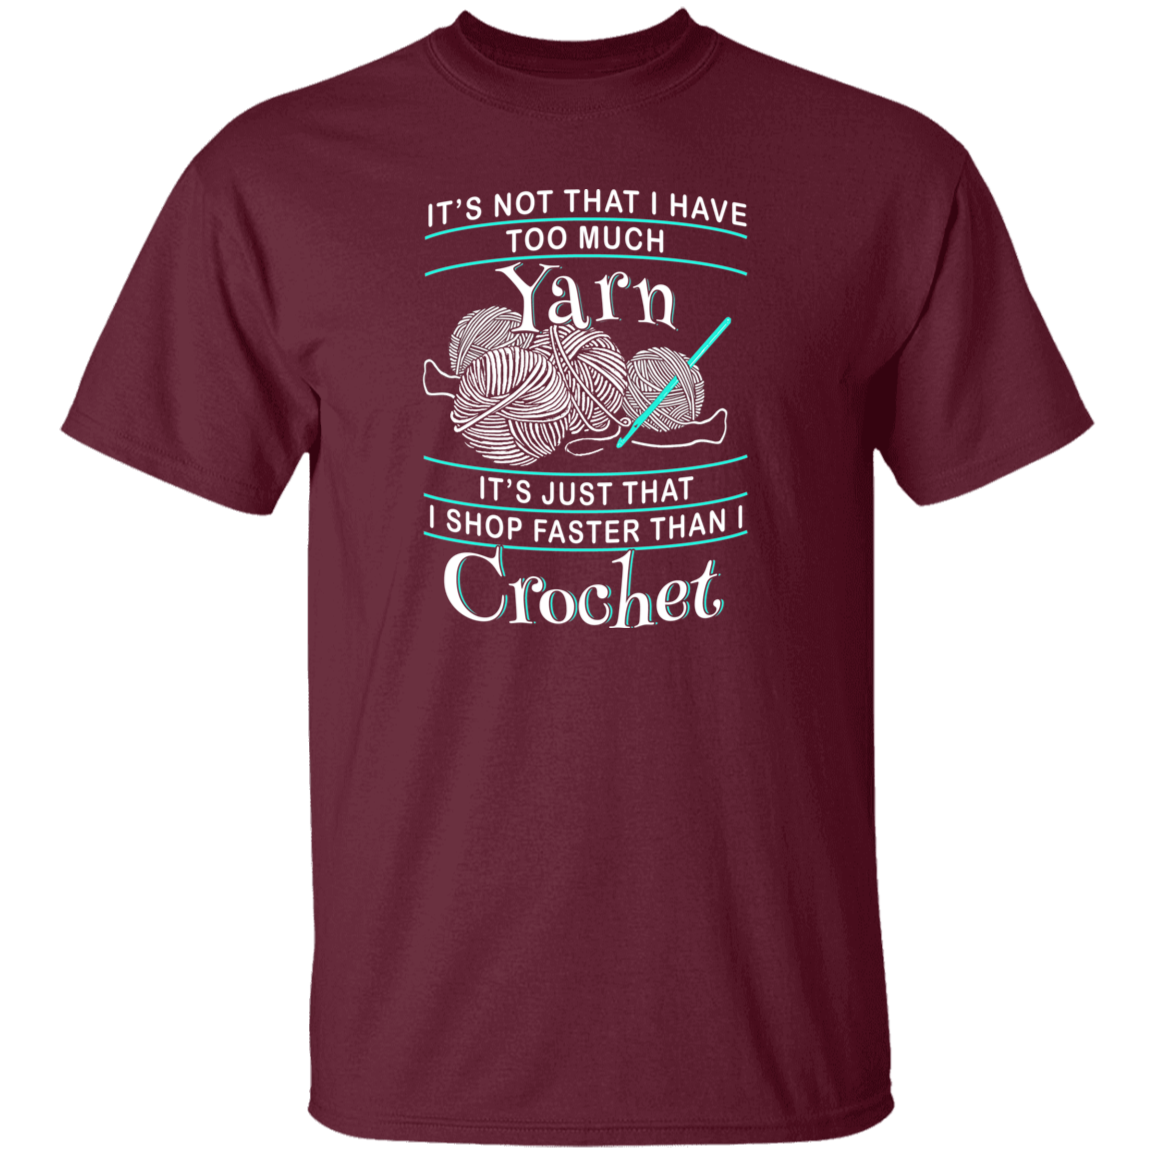 I Shop Faster than I Crochet T-Shirt